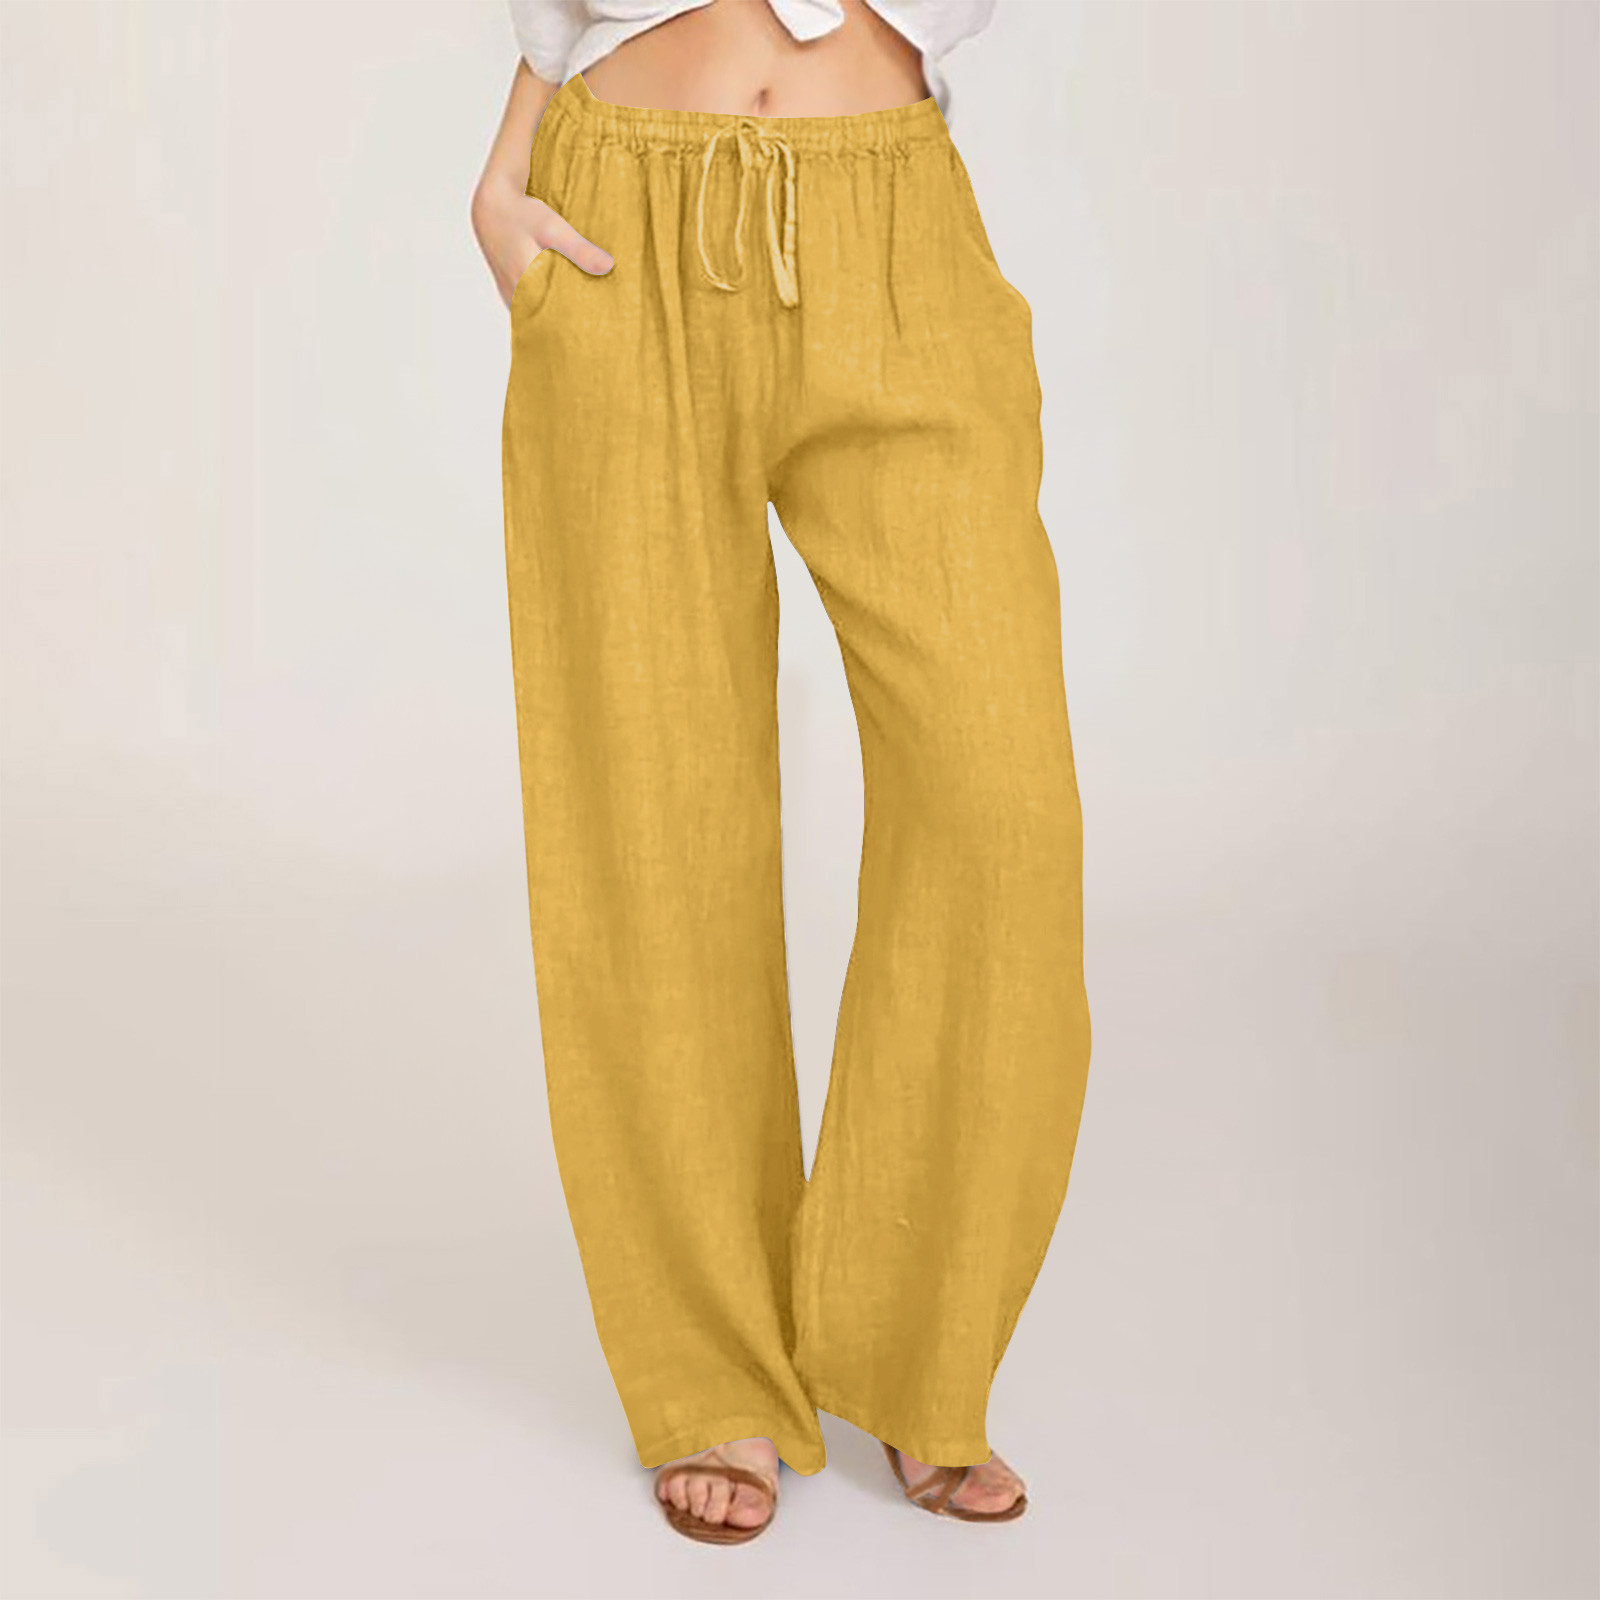 SMihono Clearance Teen Girls Full Length Trousers Women Loose Casual Cotton  Linen Drawstring Elastic Waist Long Wide Leg Pants Yellow 6